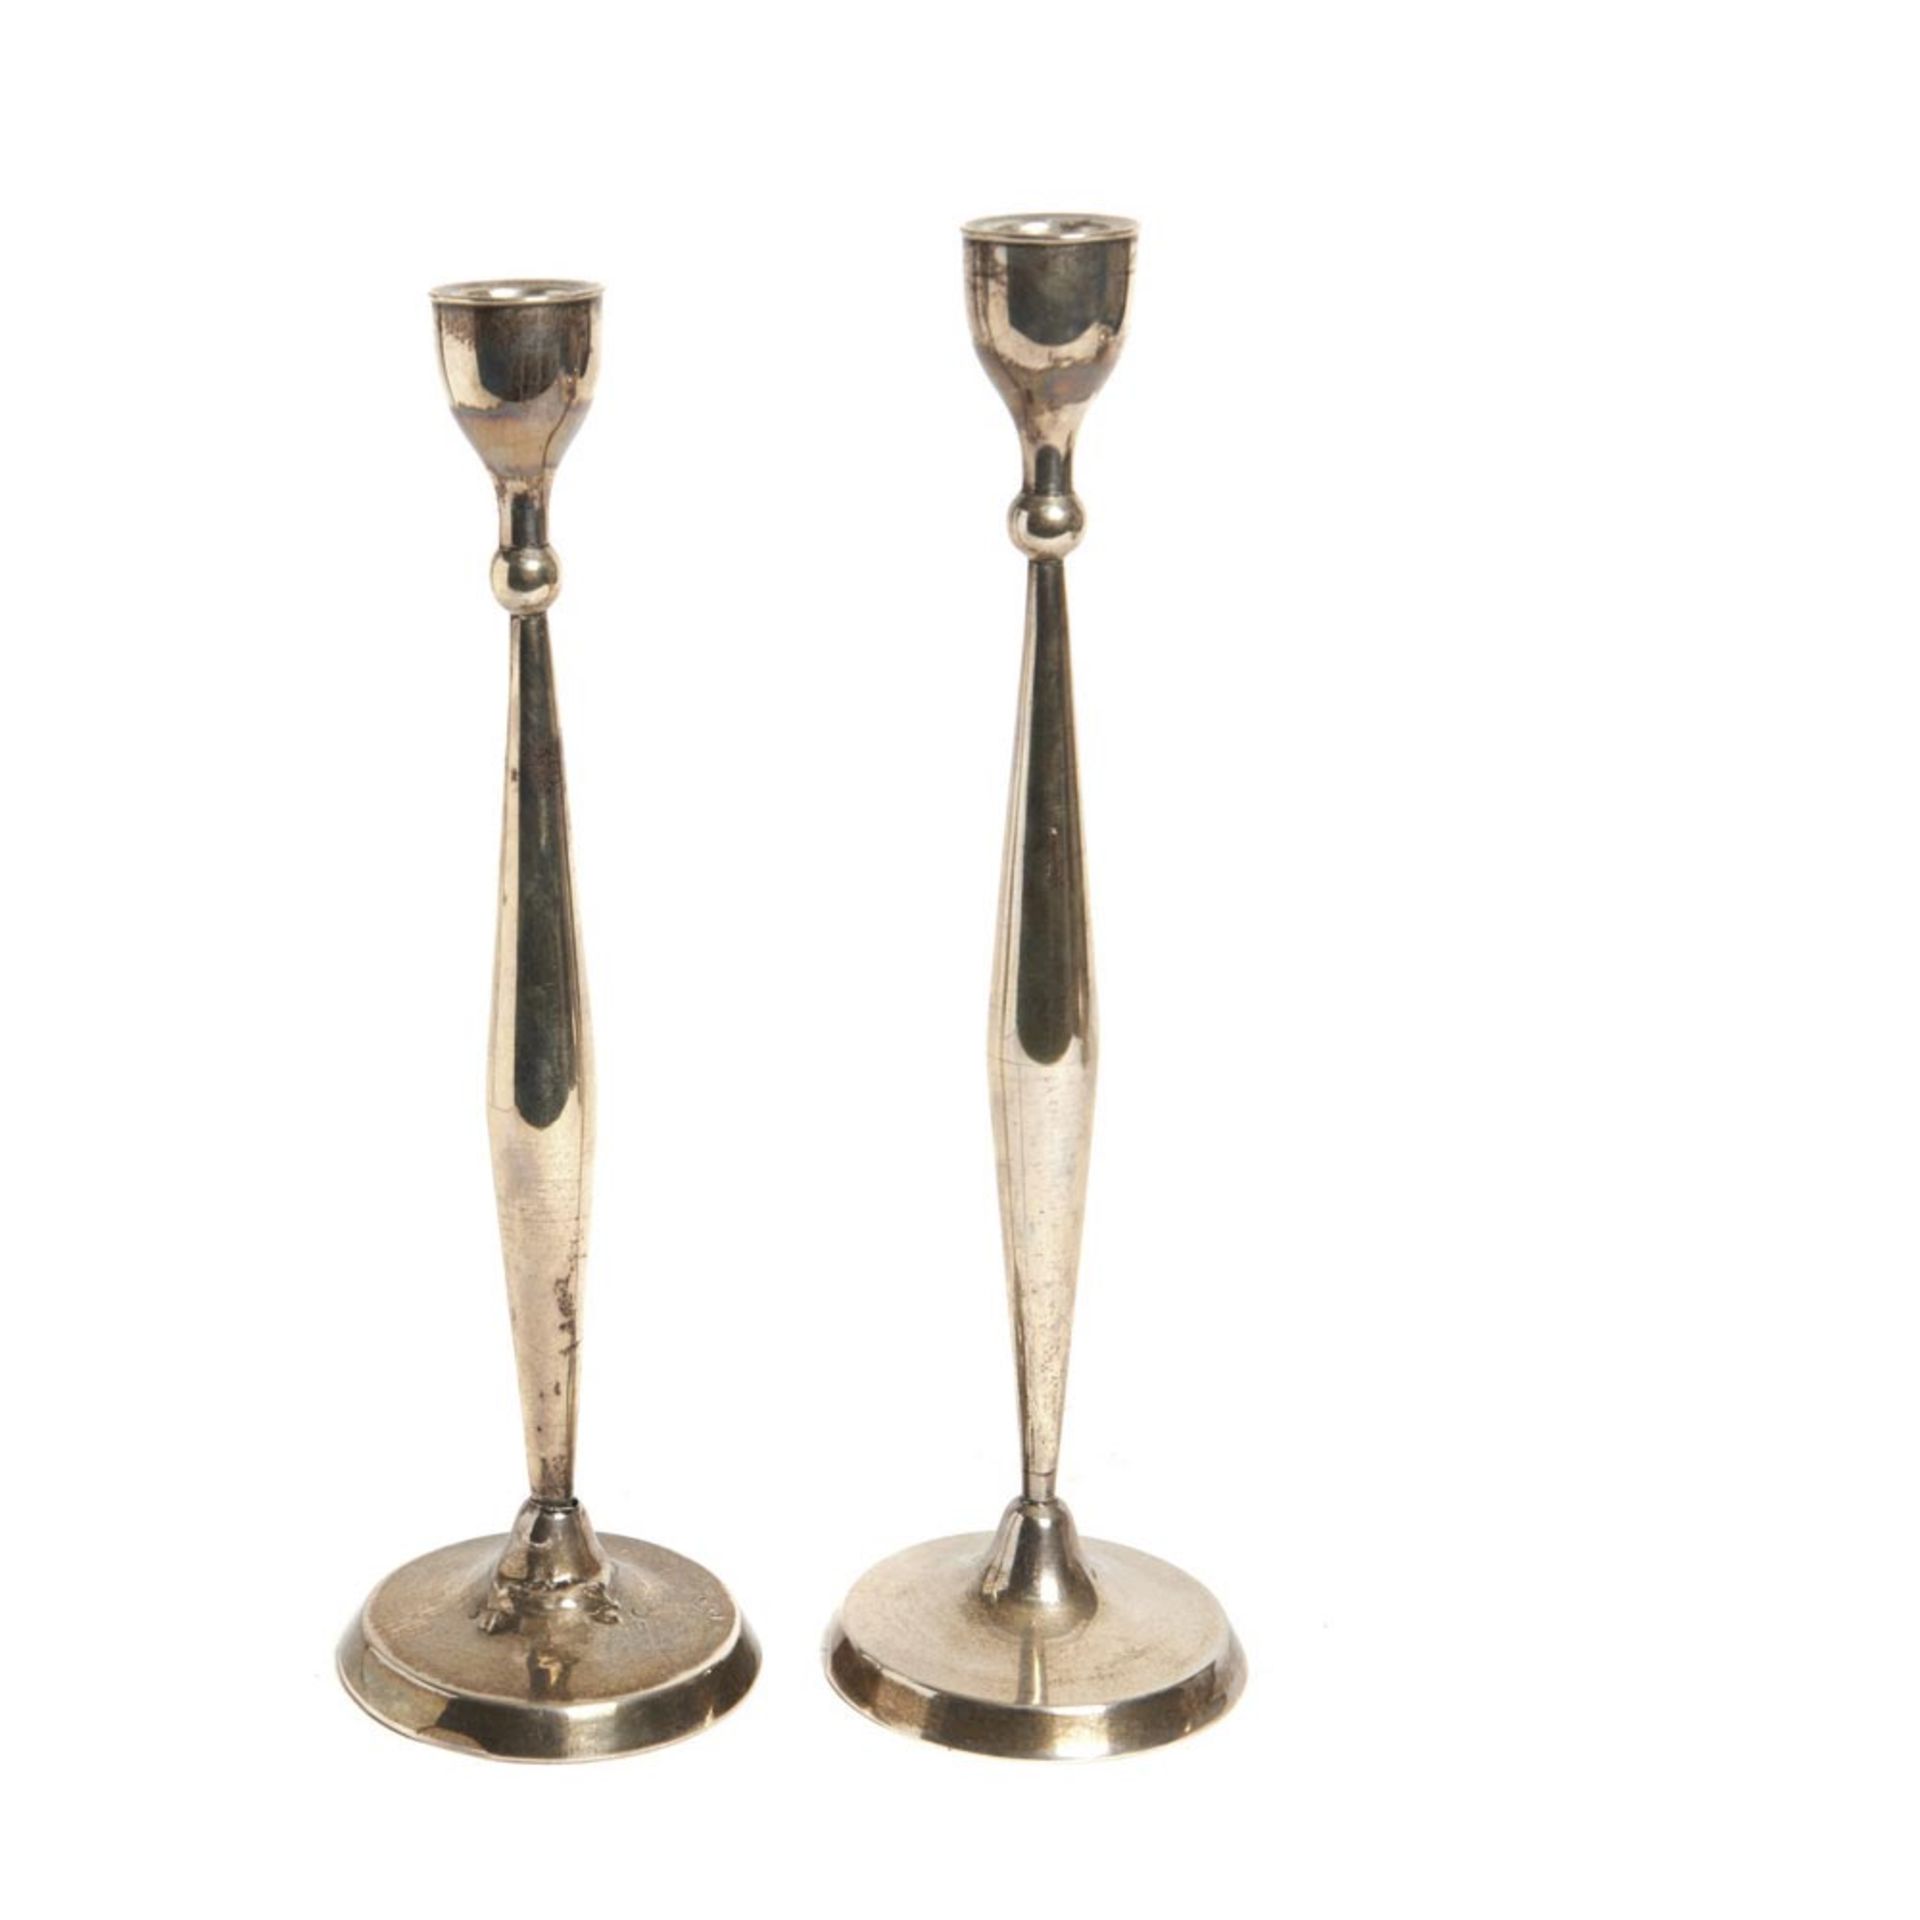 Silver pair candlesticks Pareja de candeleros en plata punzonada, s.XX. Alt. máx.: 27,5 cm. Peso